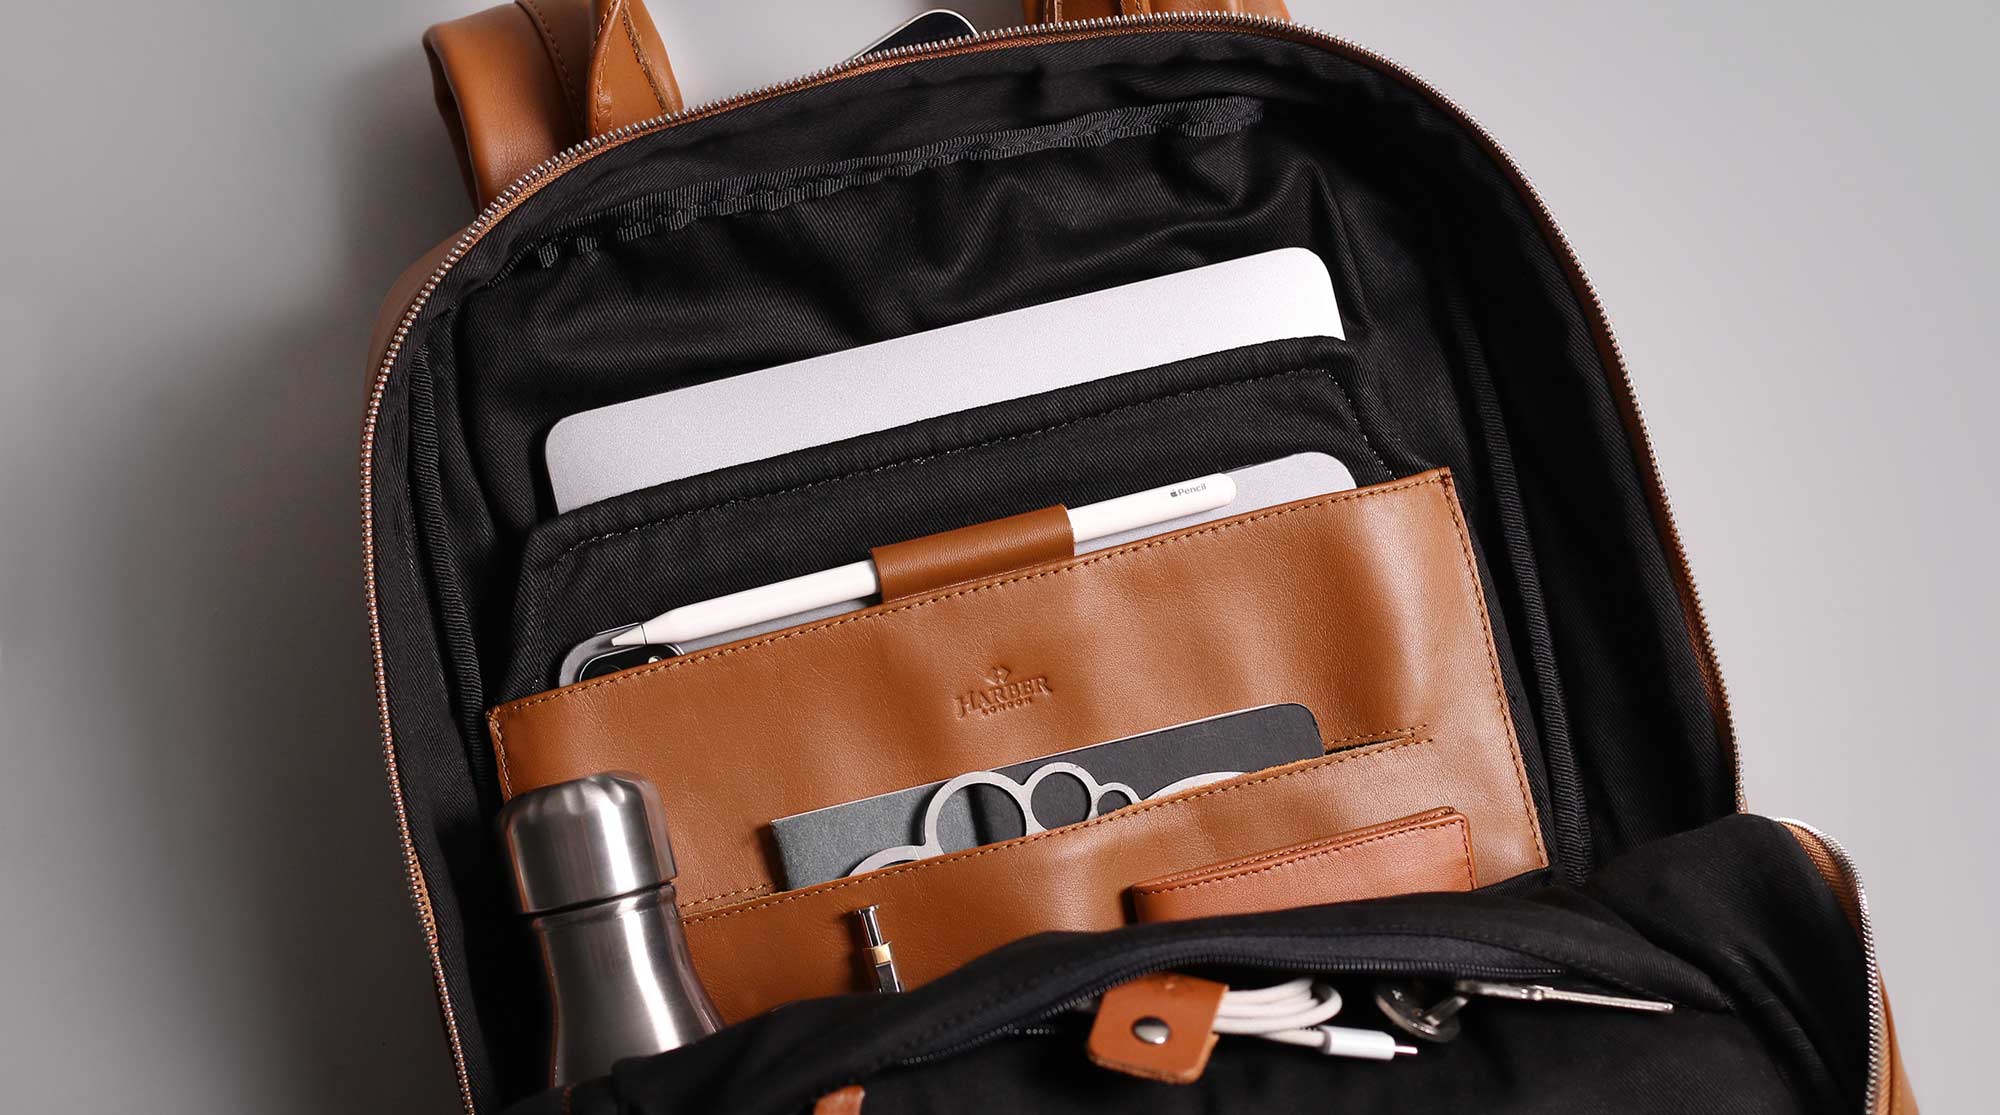 Tasche imbottite dedicate per laptop, iPad e dispositivi EDC.